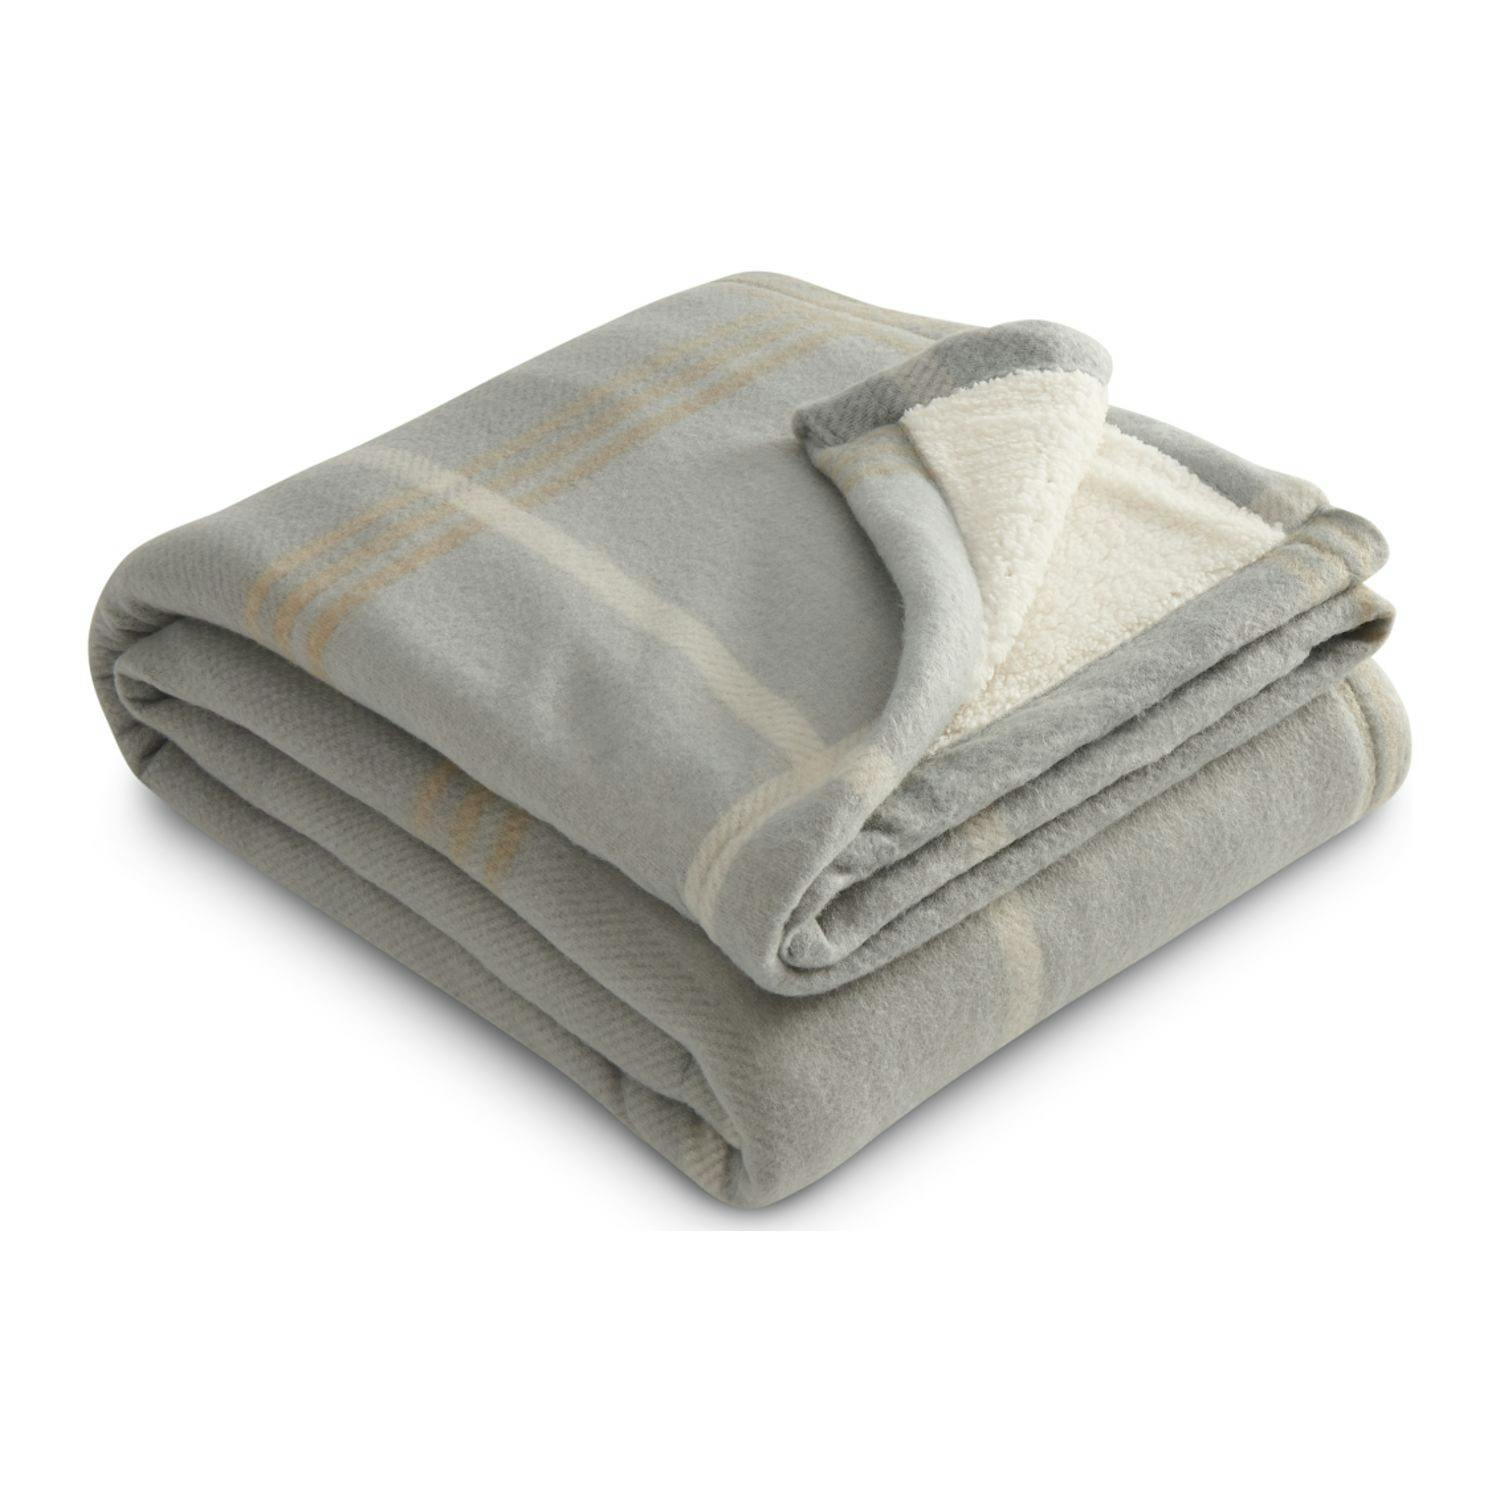 Plaid Fleece Sherpa Blanket - additional Image 4